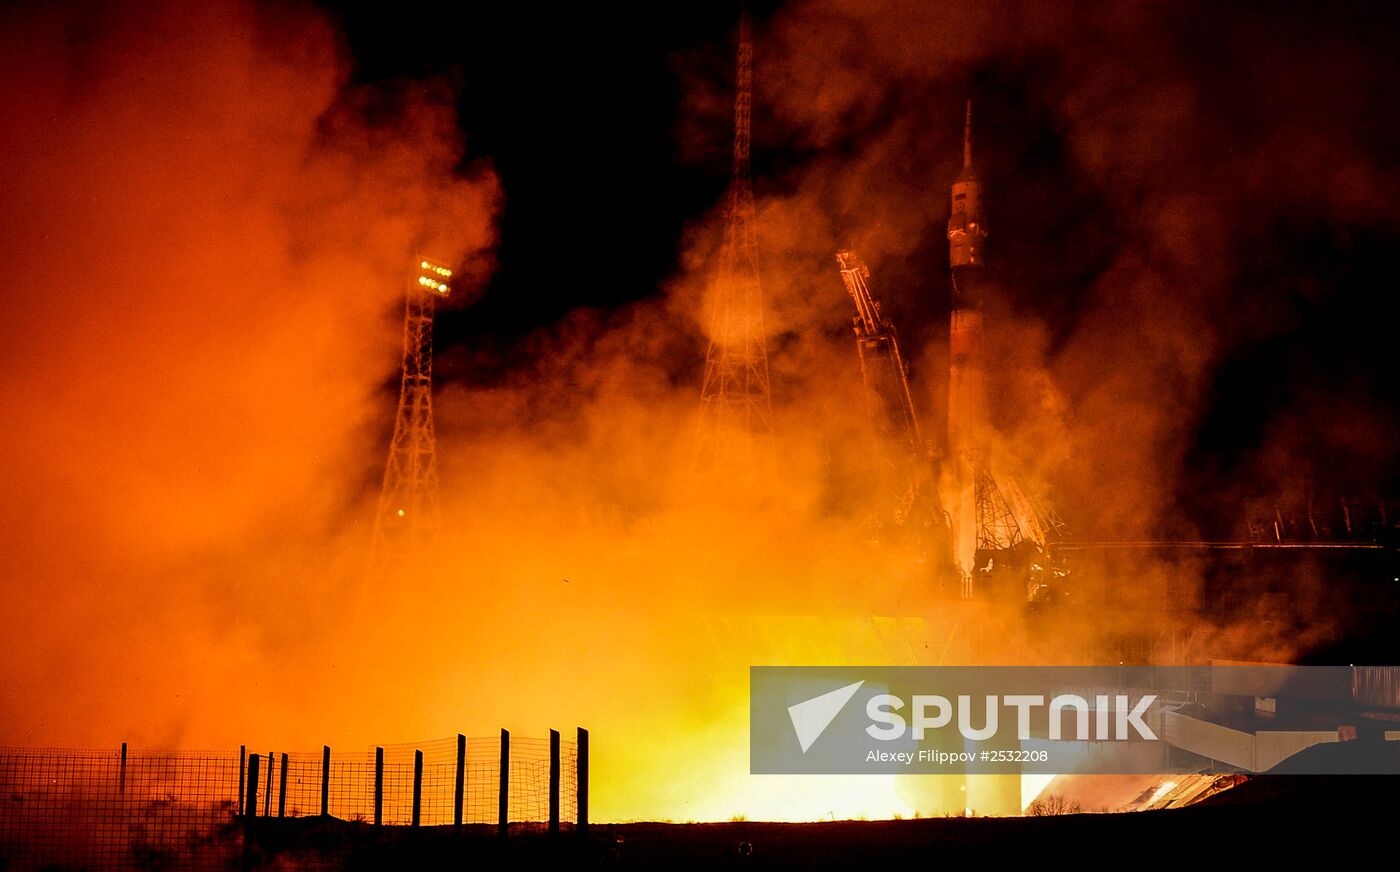 Launch of Soyuz-FG rocket with Soyuz TMA-15M spacecraft